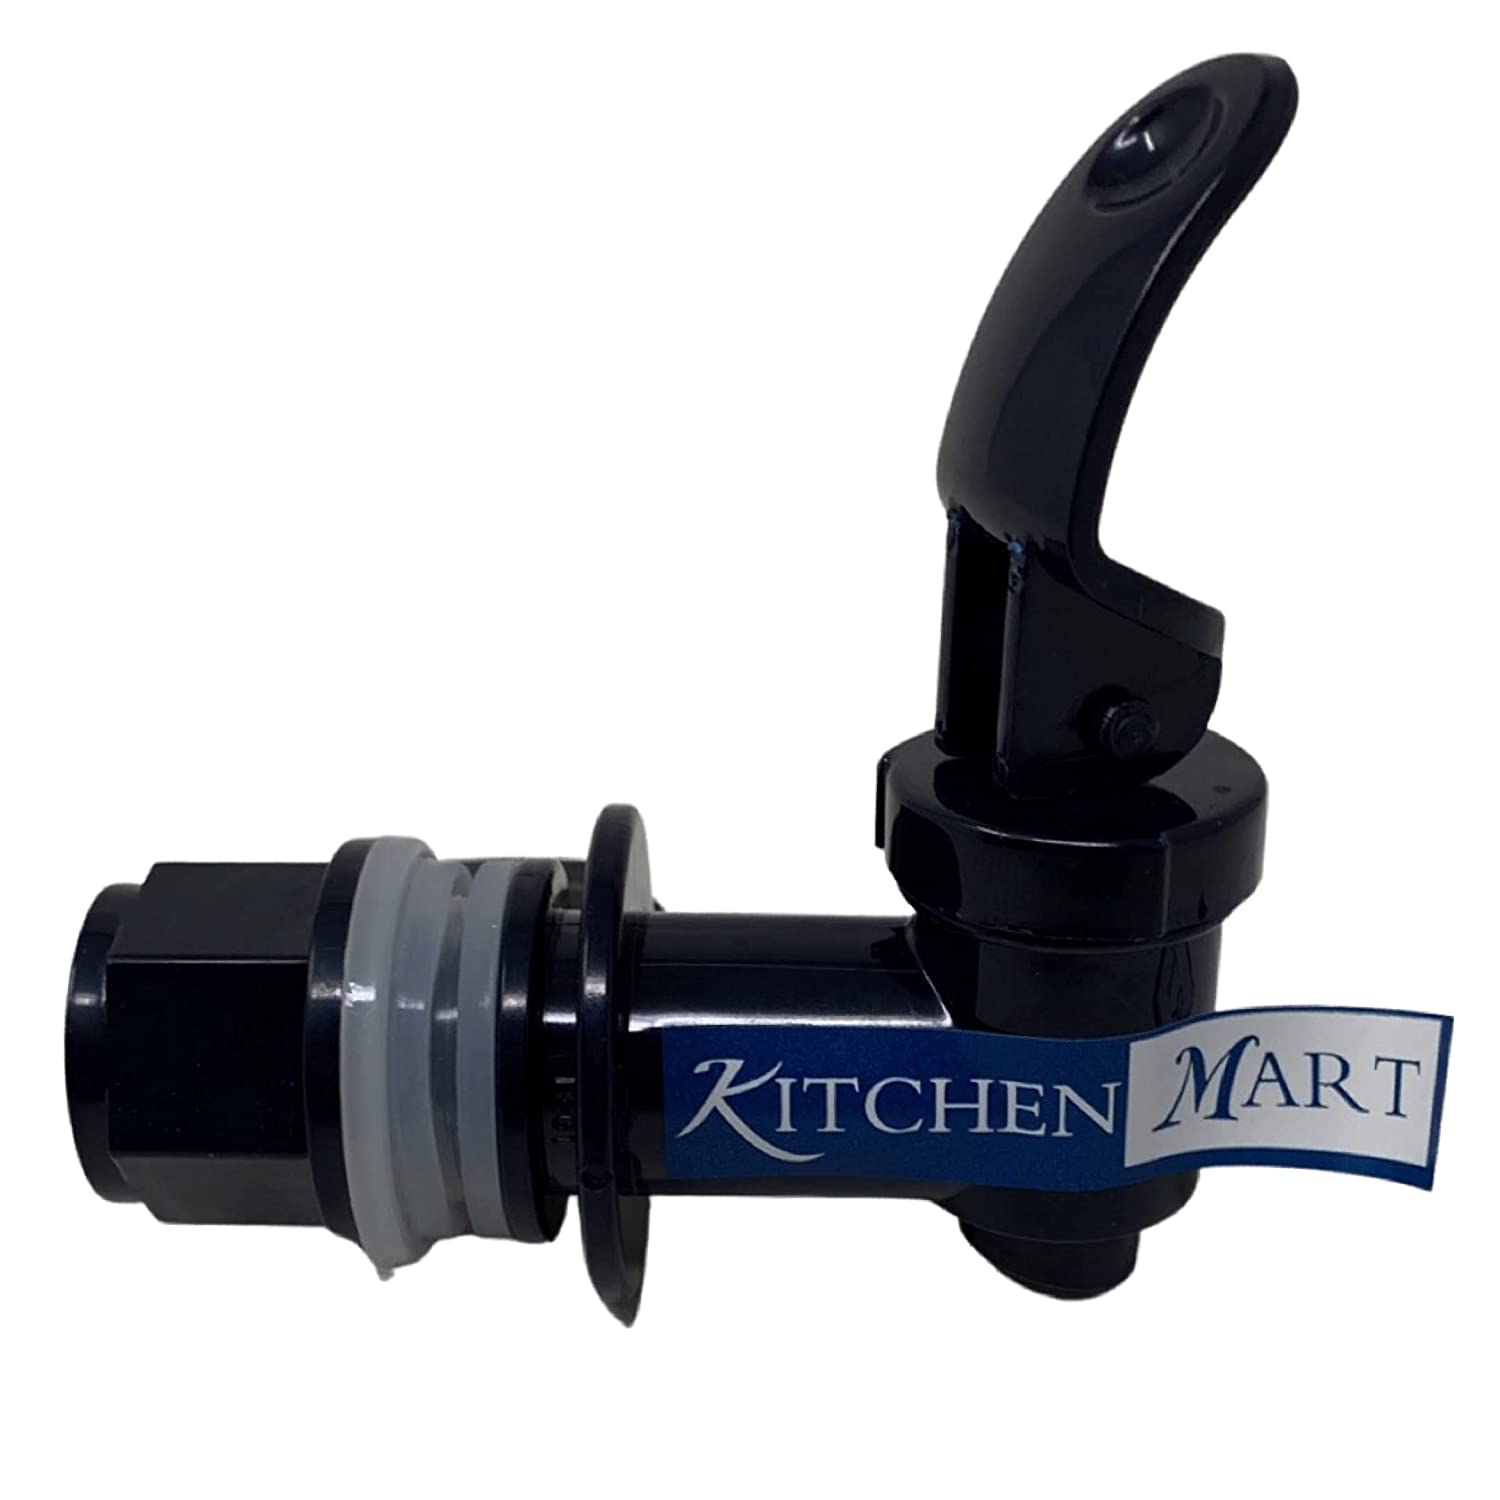 Kitchen Mart tap suitable for Pureit water purifiers (Blue)